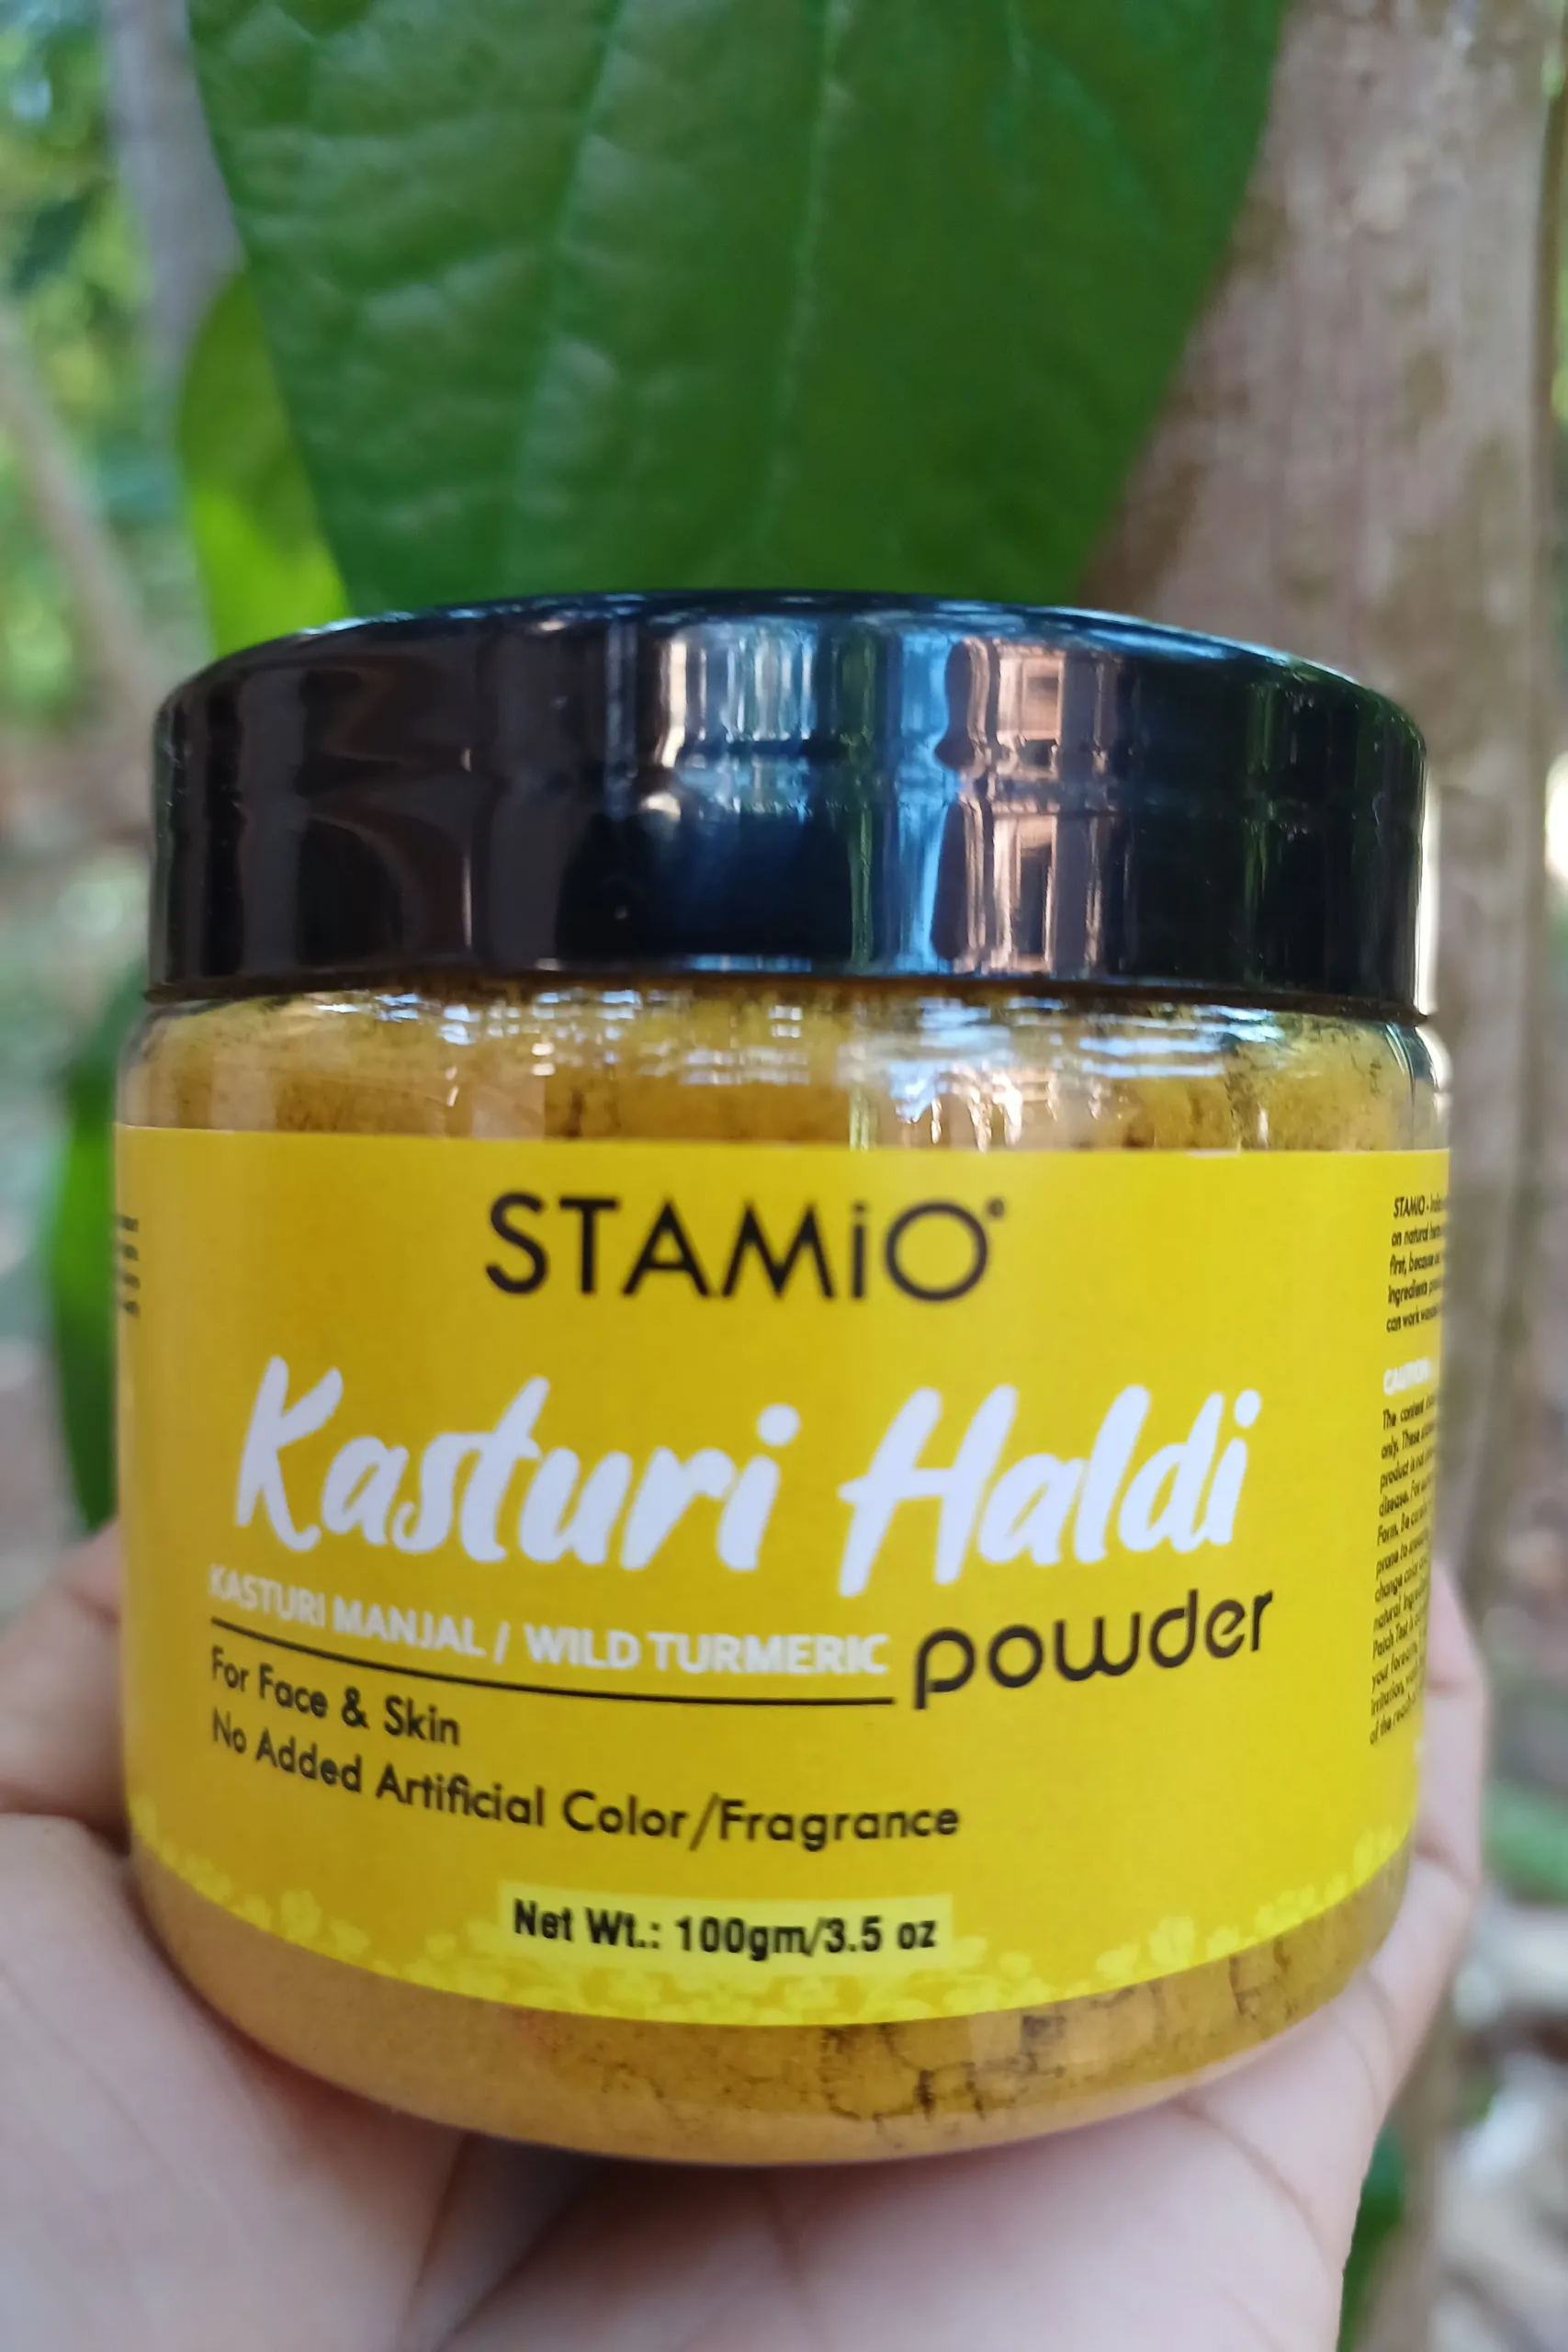 Stamio Kasturi Haldi Powder Review